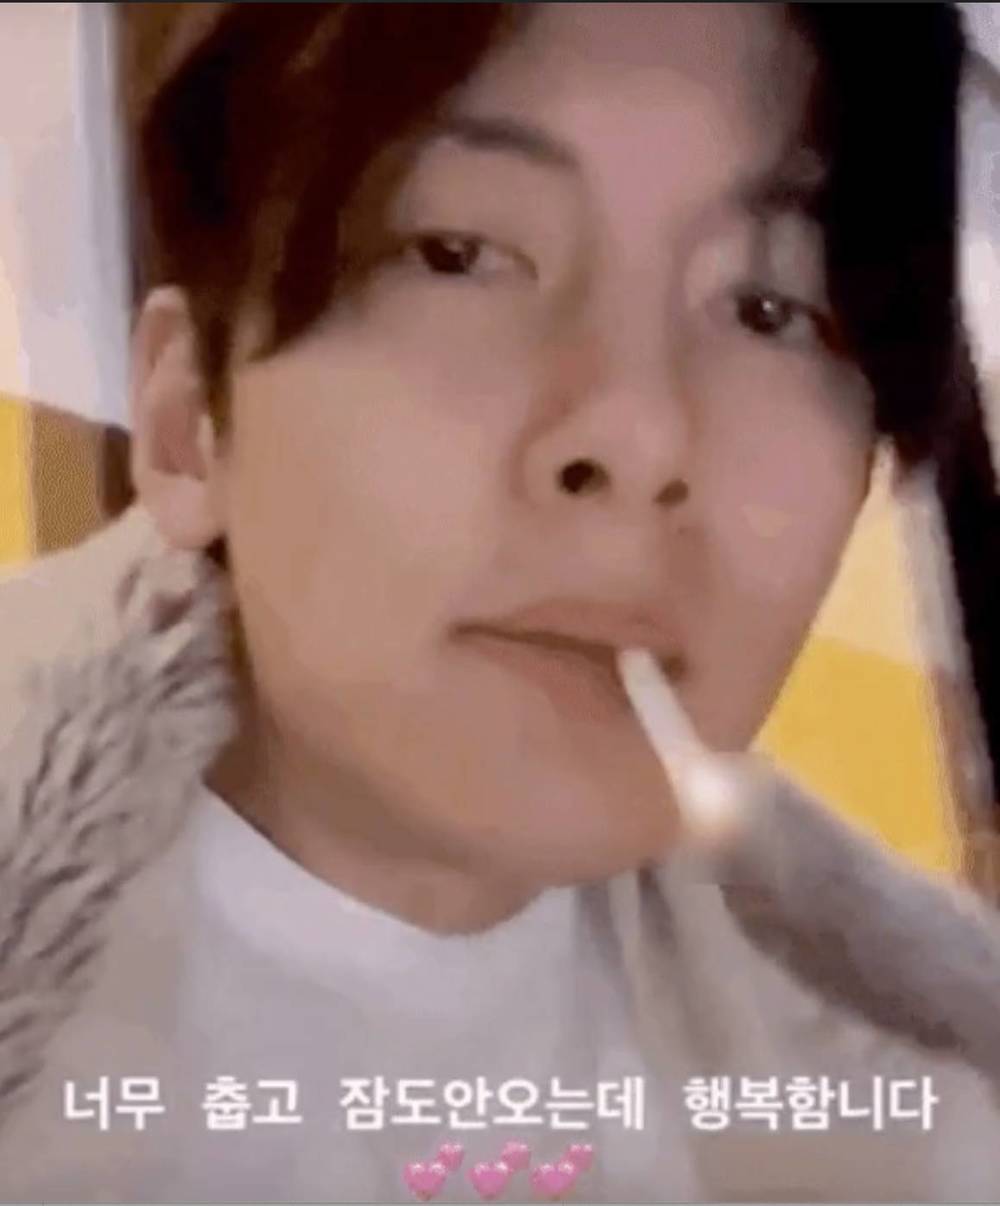  
Ji Chang Wook khiến fan sốc khi khoe hút thuốc.